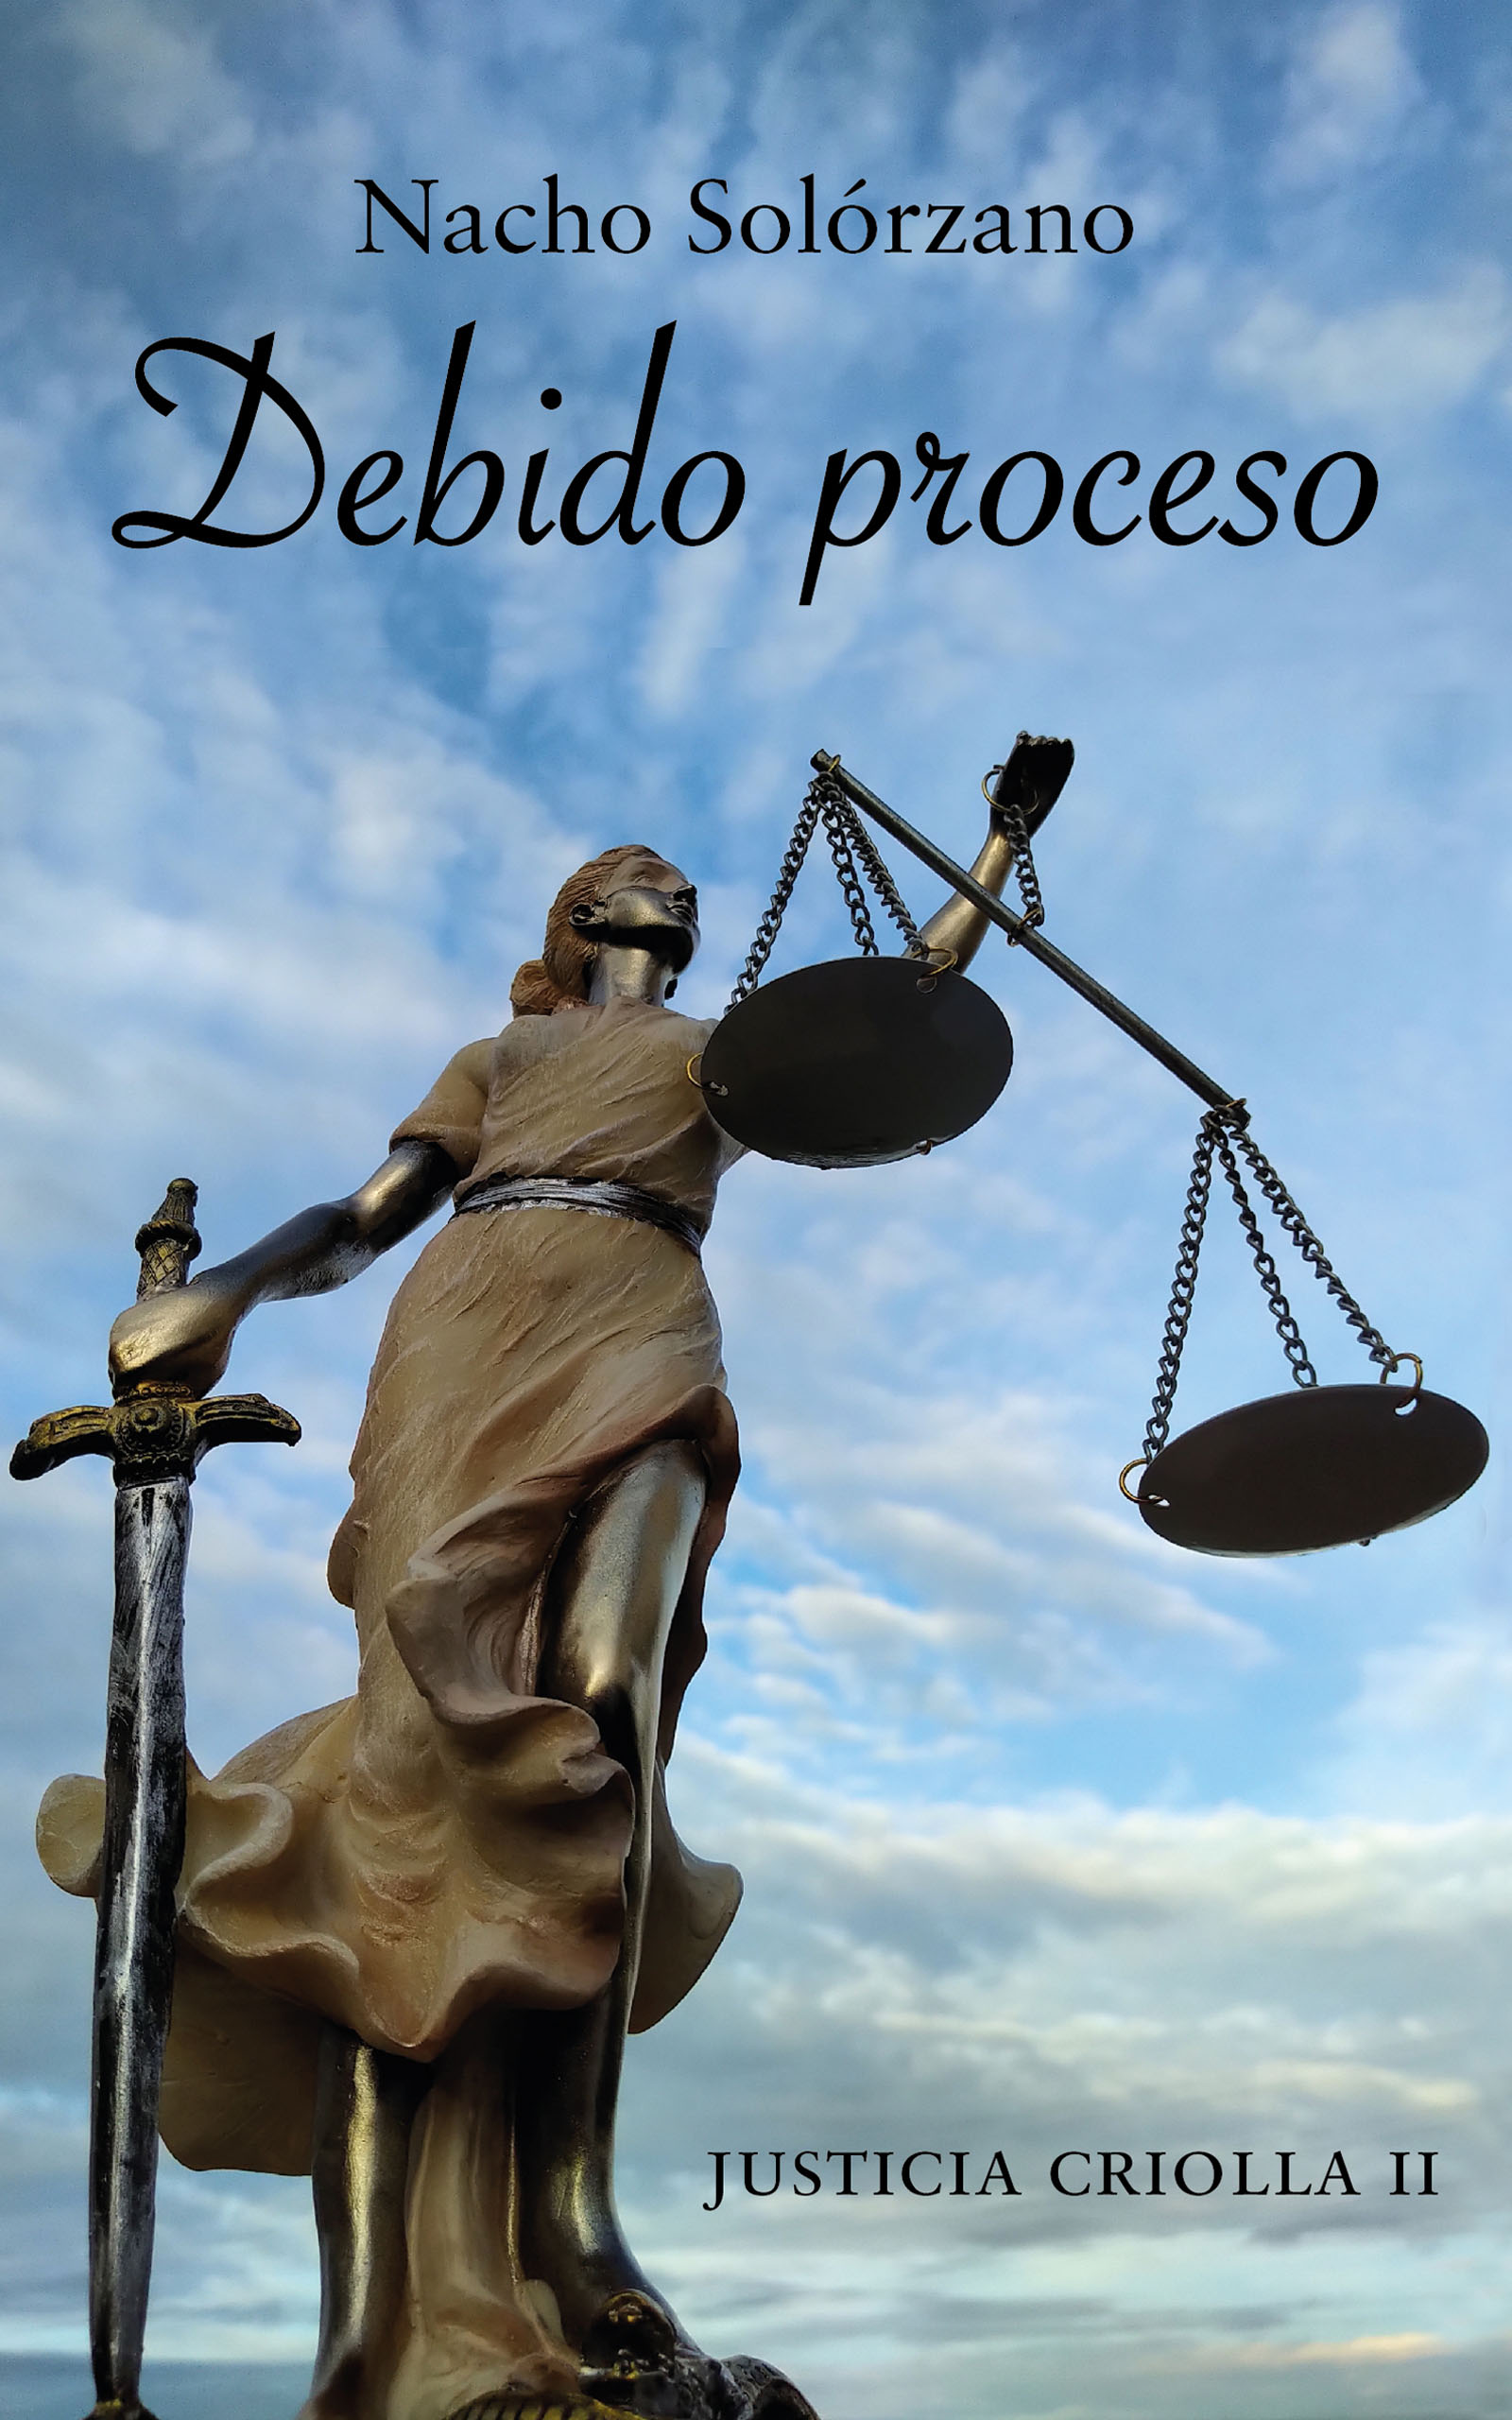 Portada Justicia criolla: debido proceso